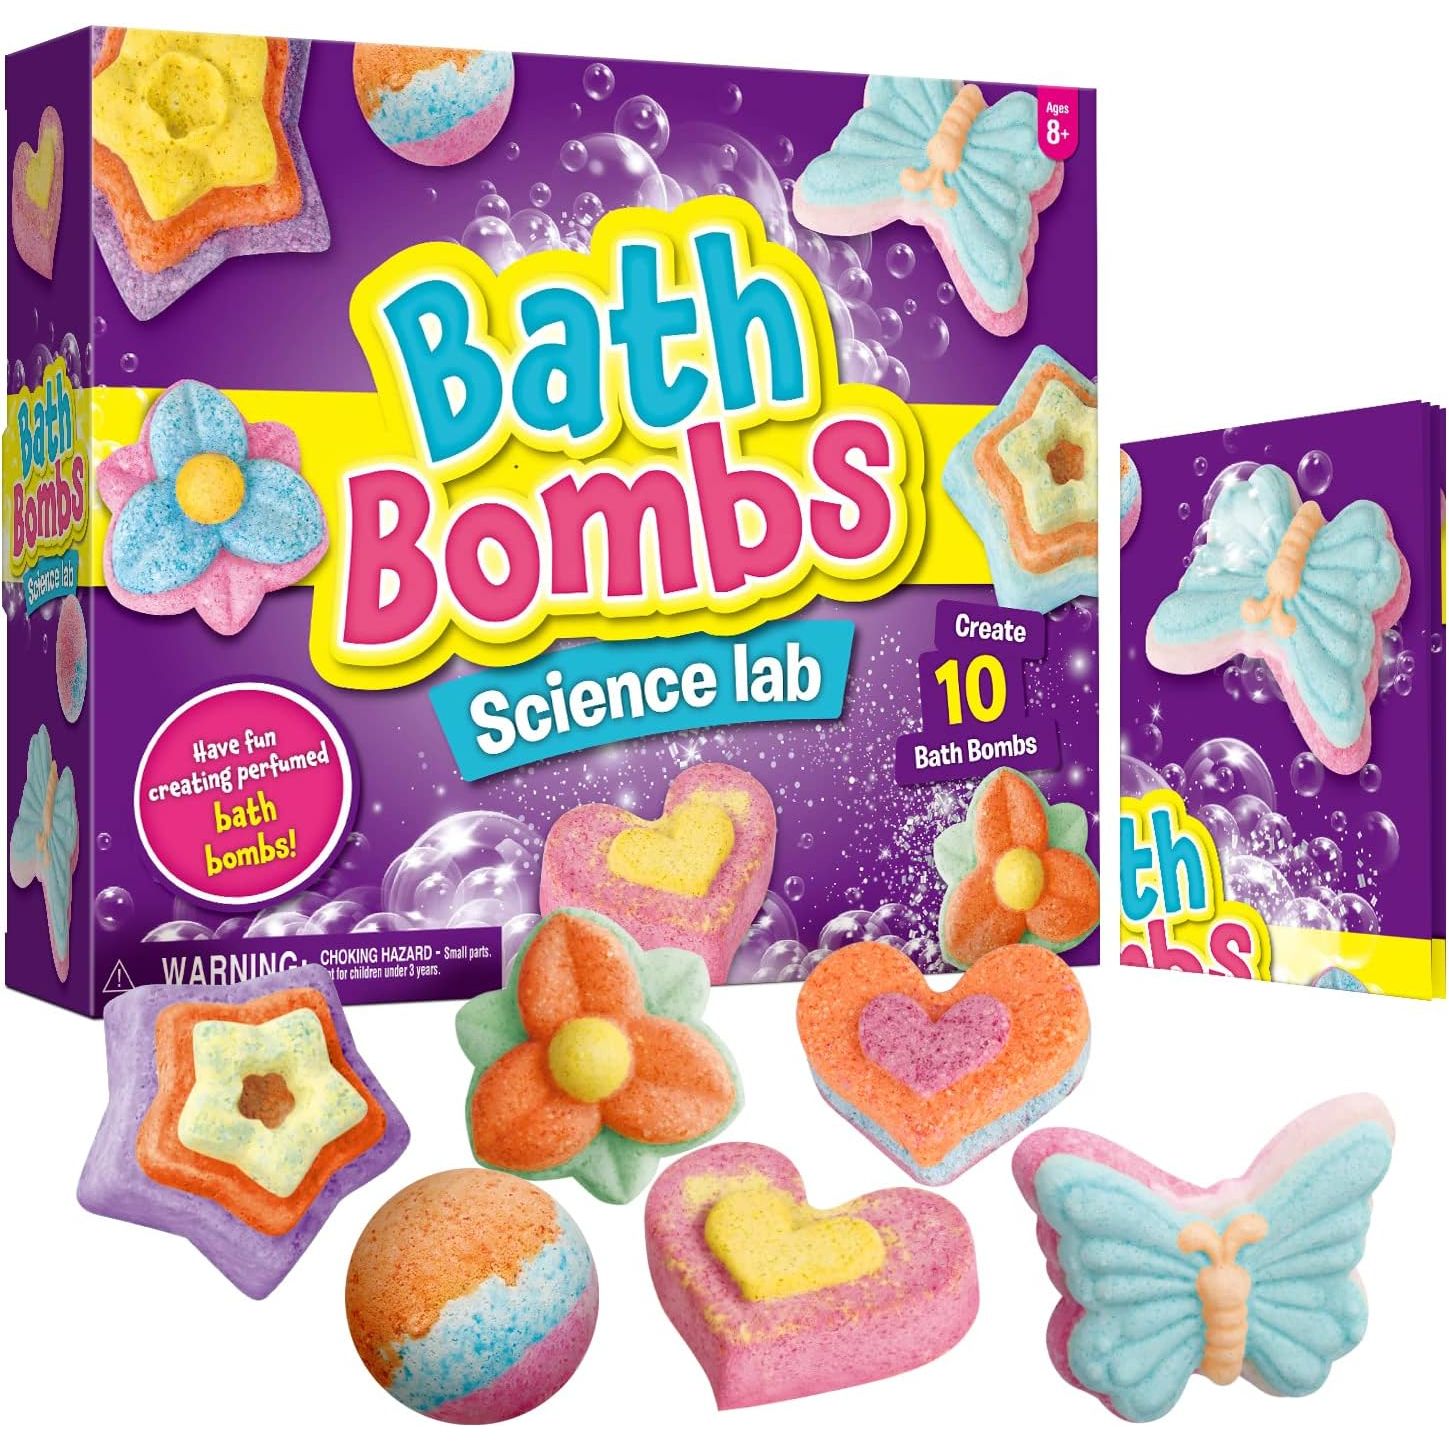 Eduman Bath bombs science lab, DIY Toy for kids EDM074, 8+